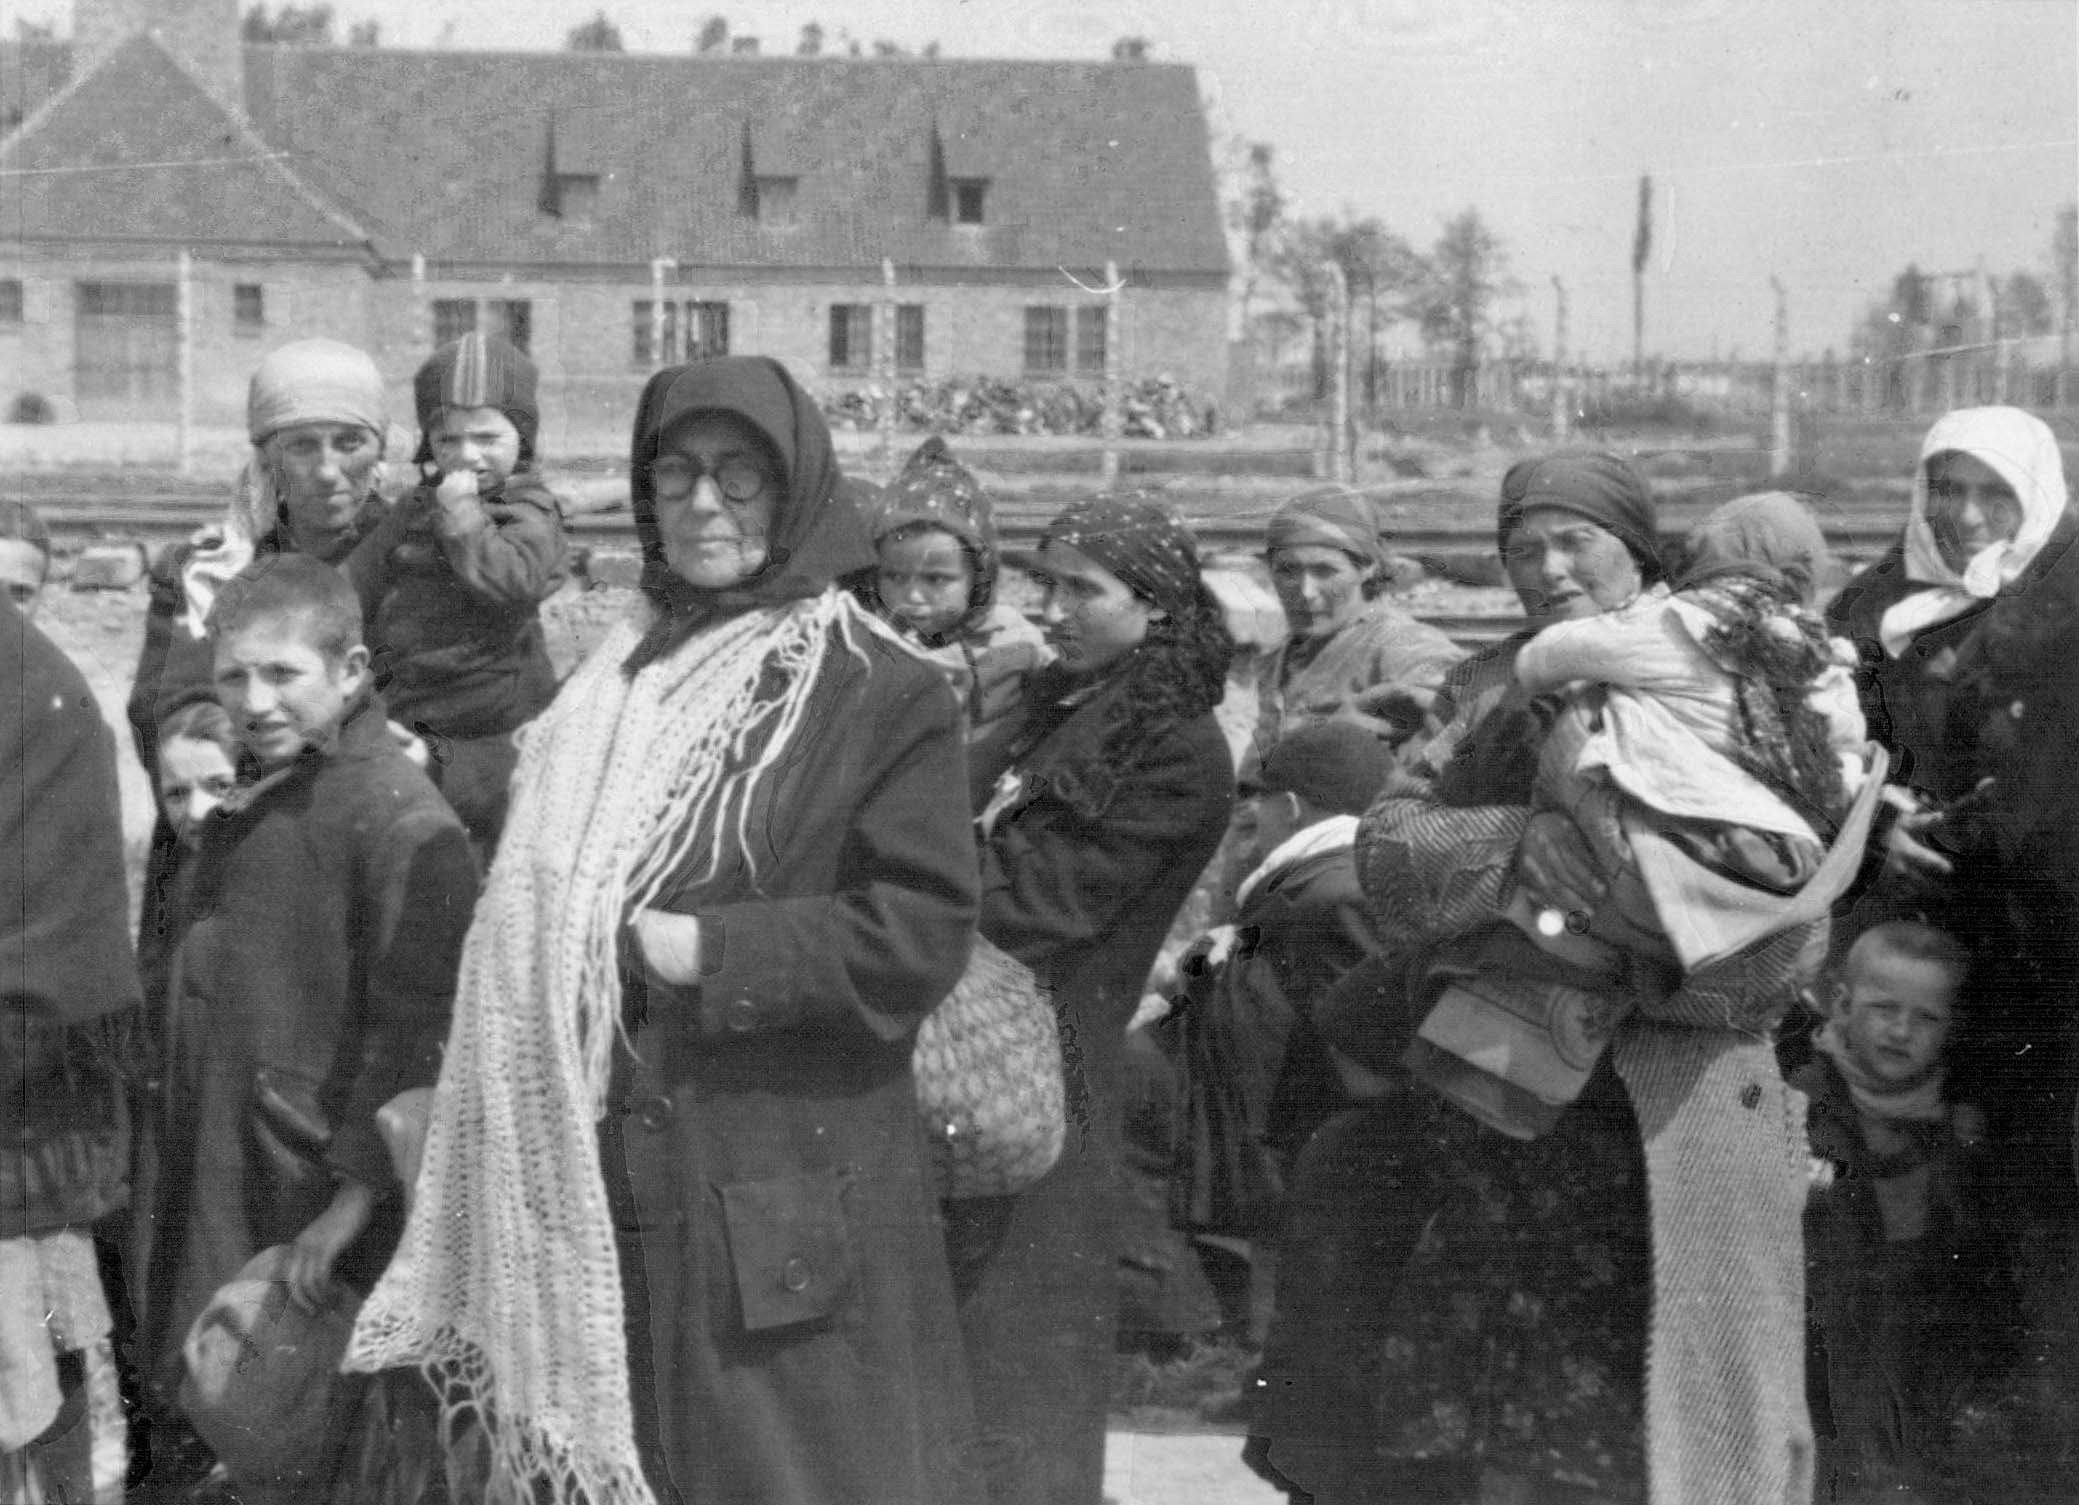 Auschwitz-Birkenau, Poland, Jewish women and children deemed "unfit for work" being unknowingly led to Gas Chamber #3.